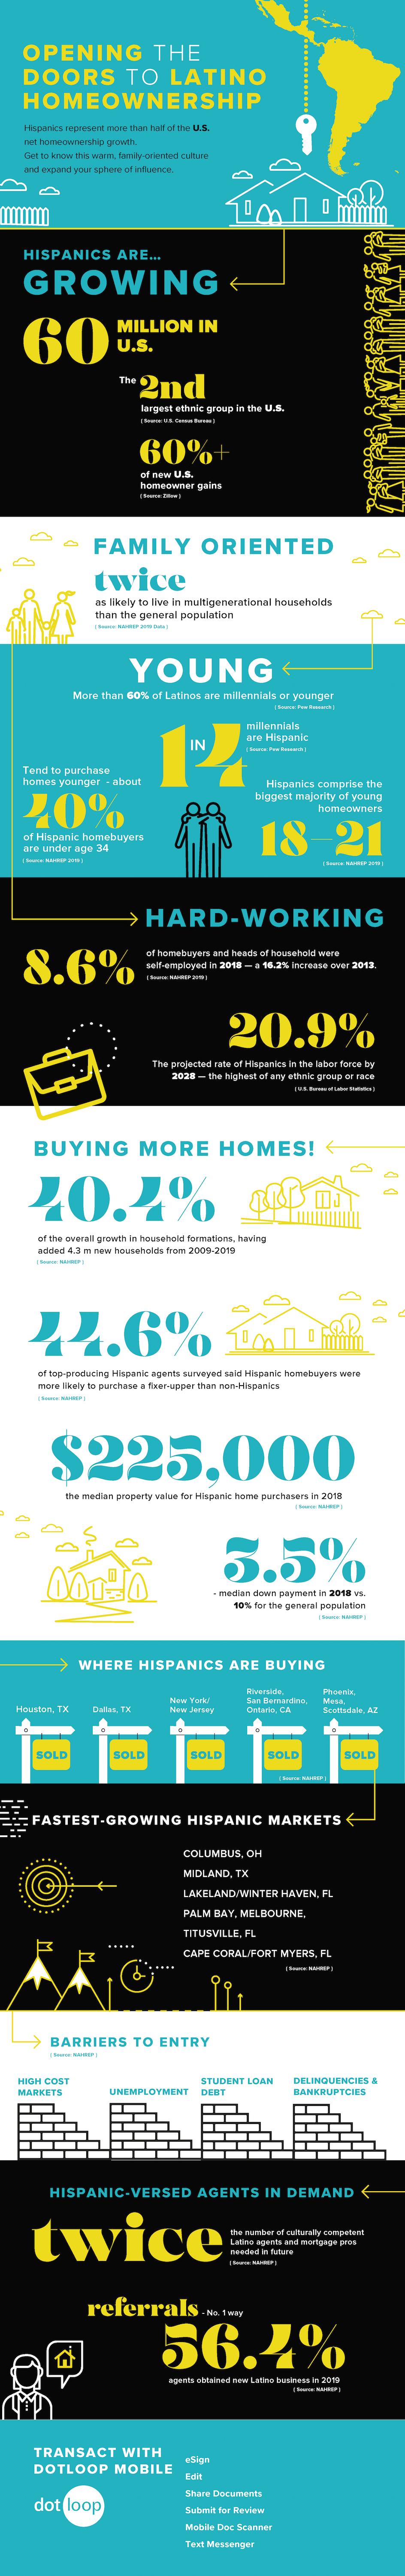 Infographic: Latino Homeownership Stats in the U.S.